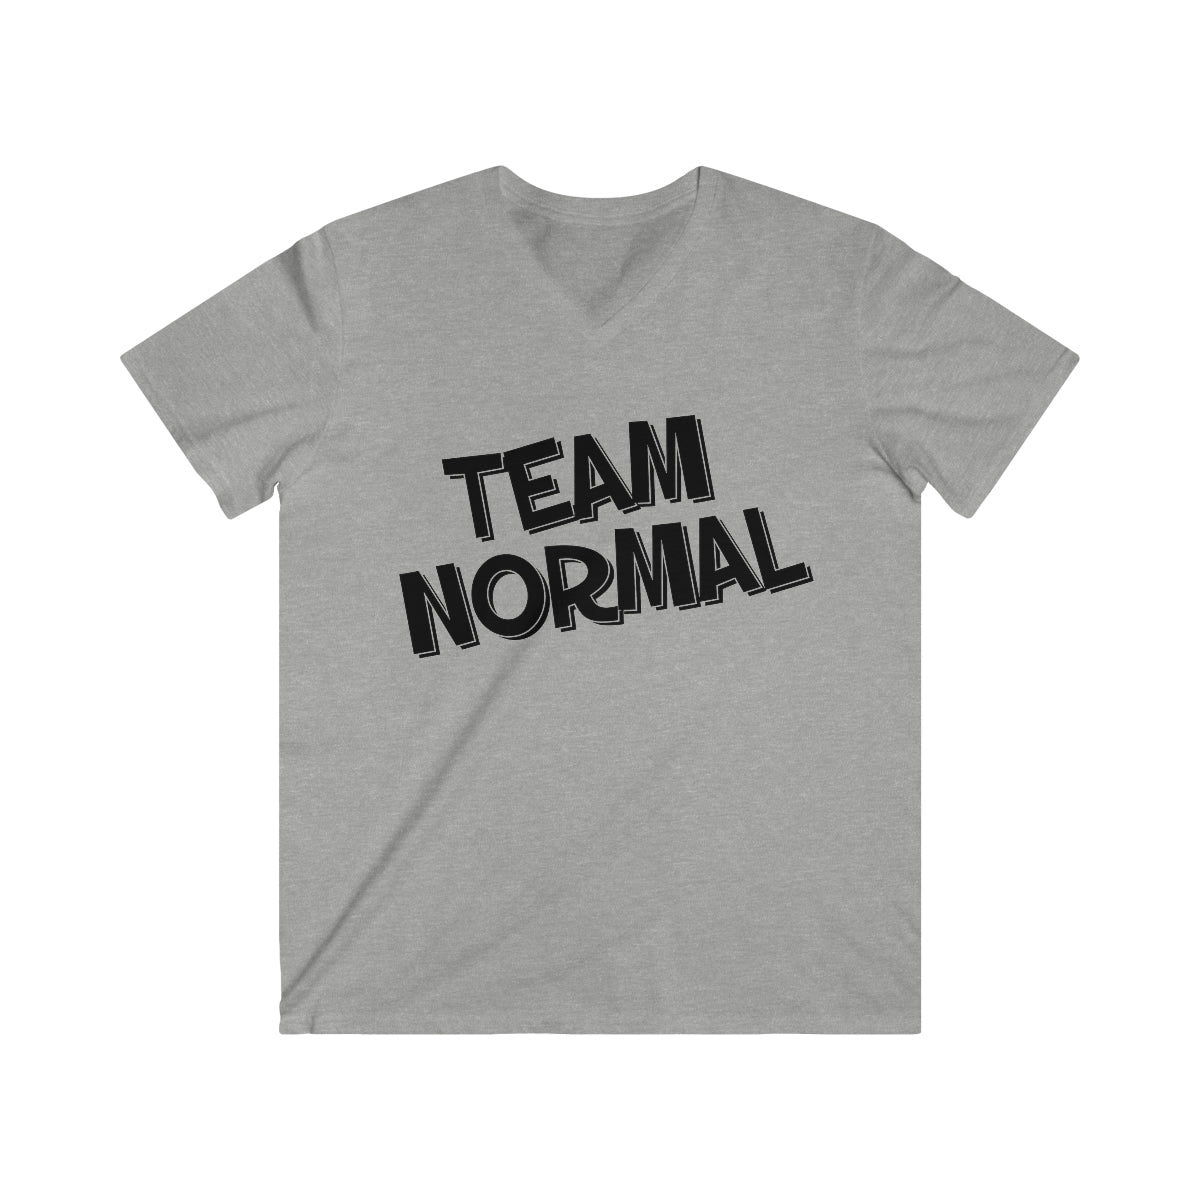 Team Normal Men's Fitted V-Neck Short Sleeve Tee